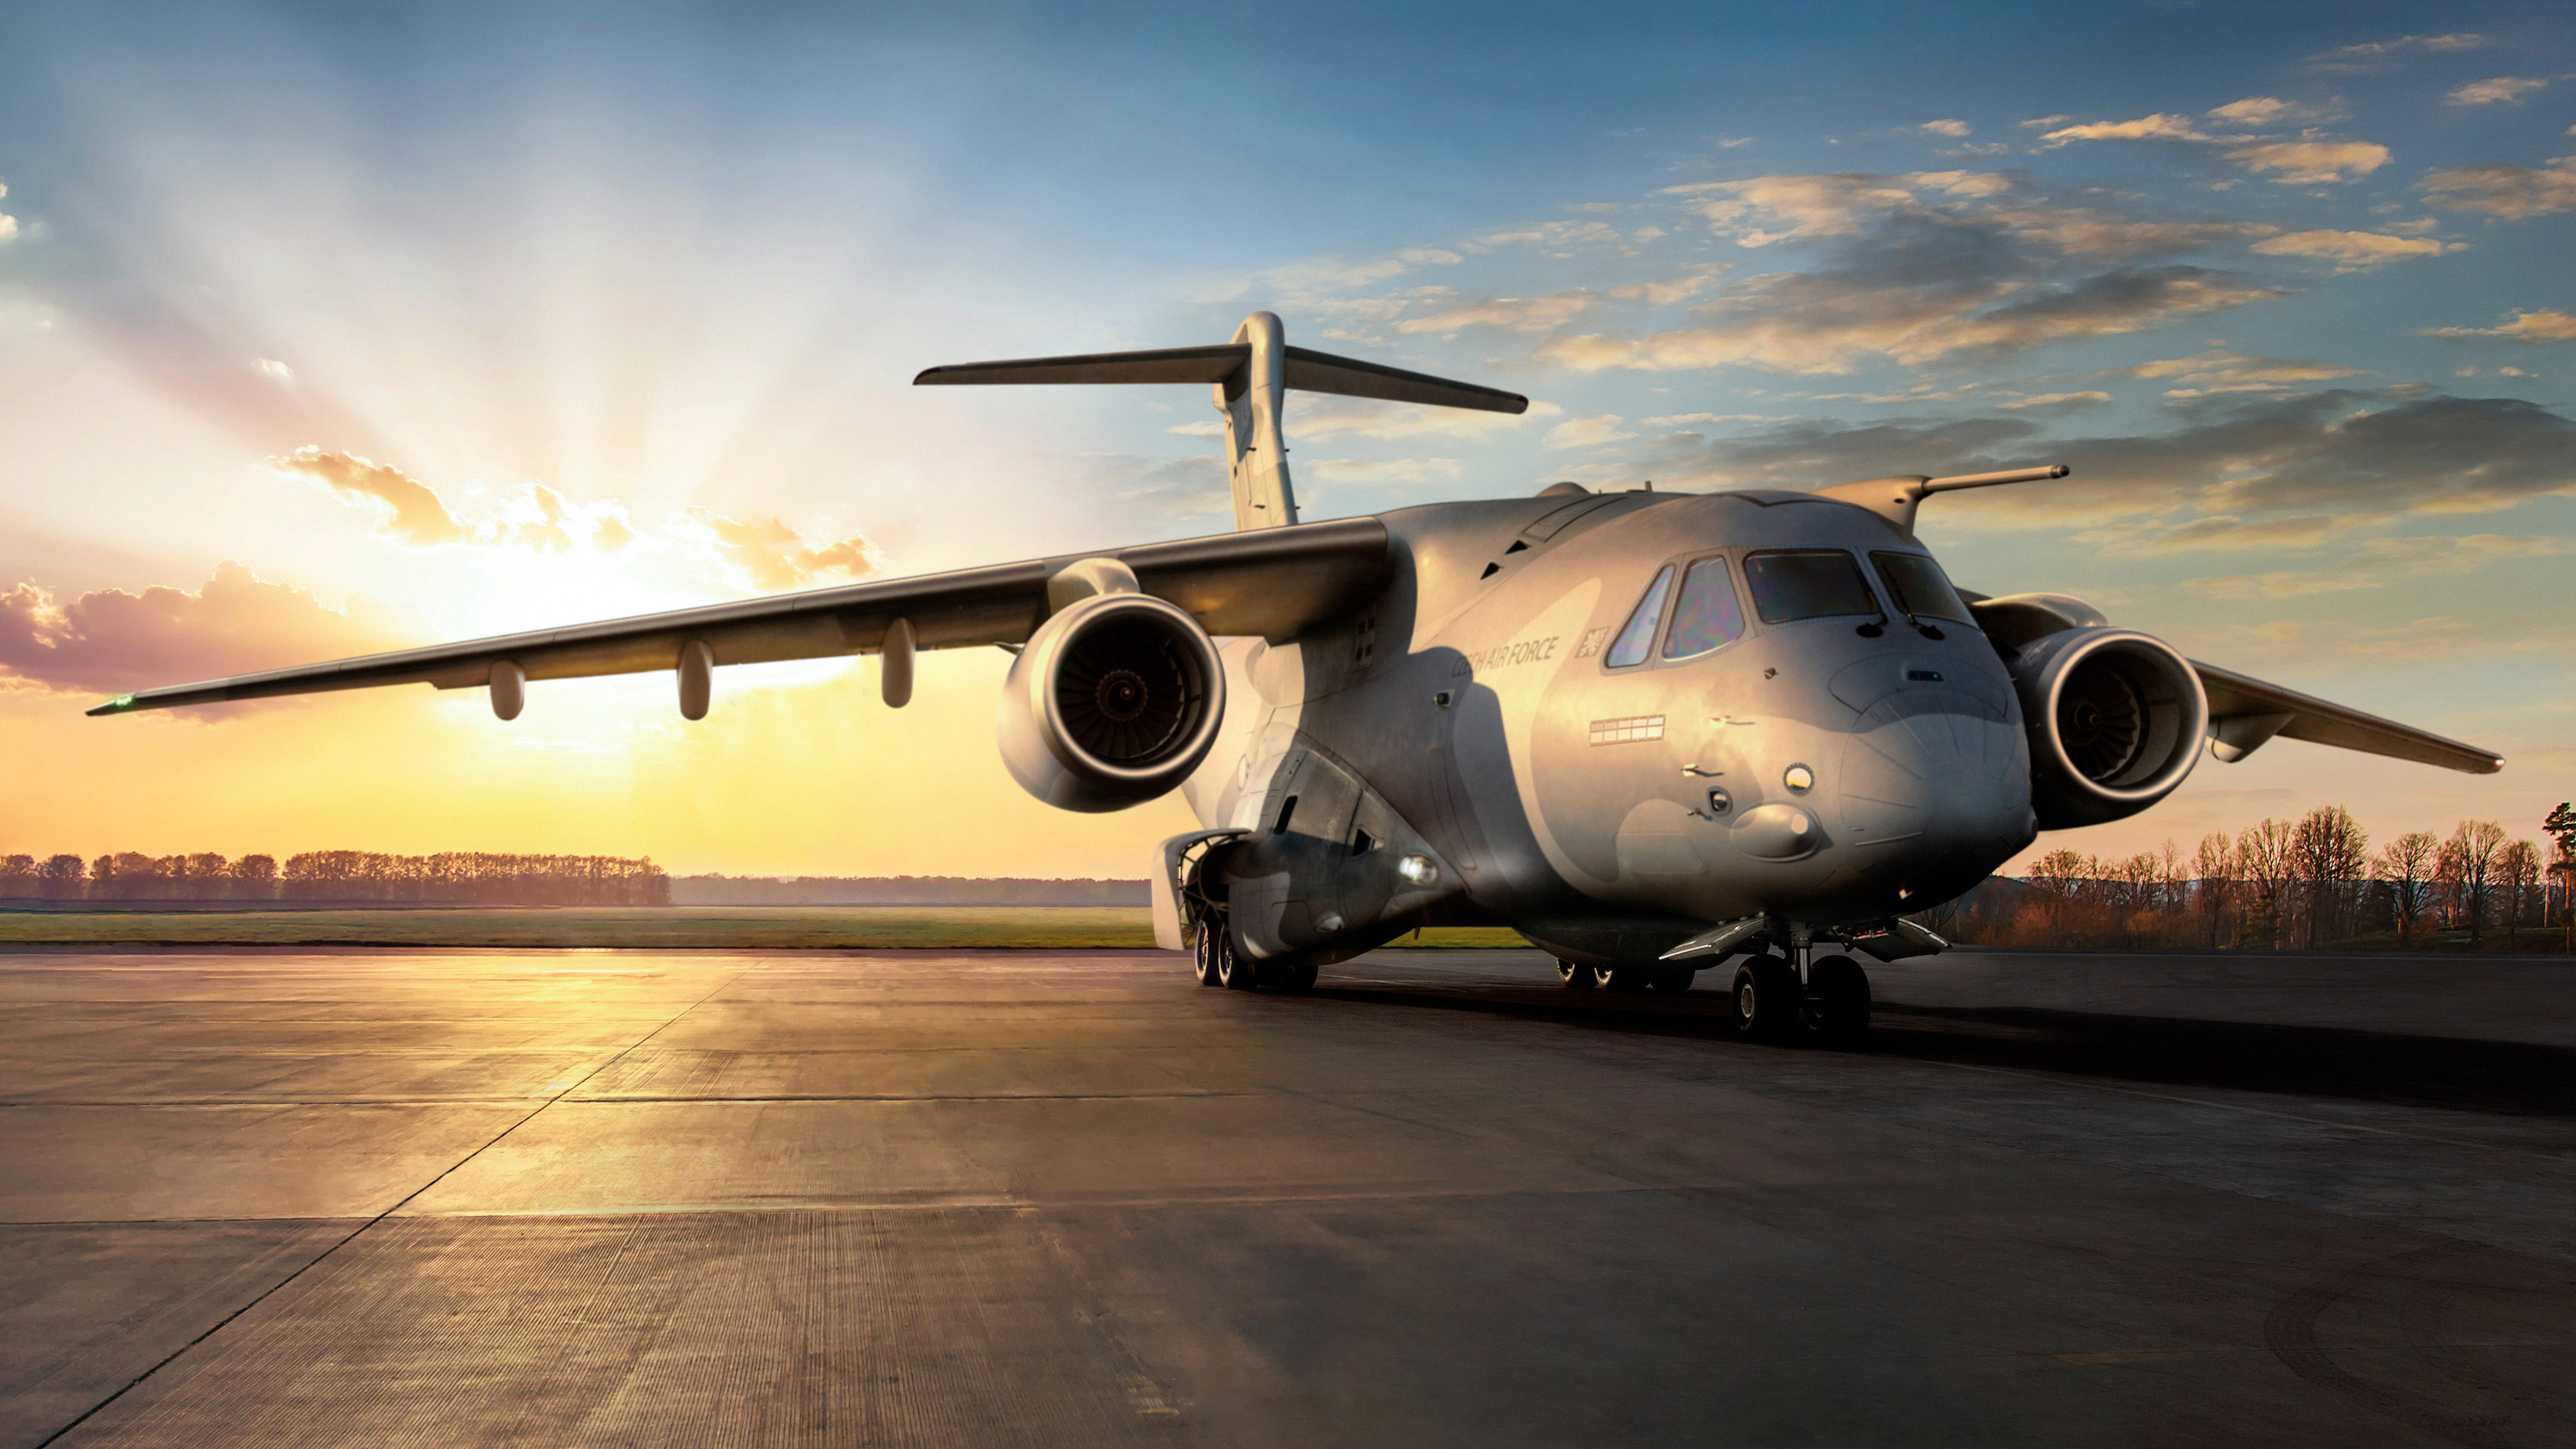 Czech Republic selects the Embraer C-390 Millennium as its Next Medium Military Transport Aircraft